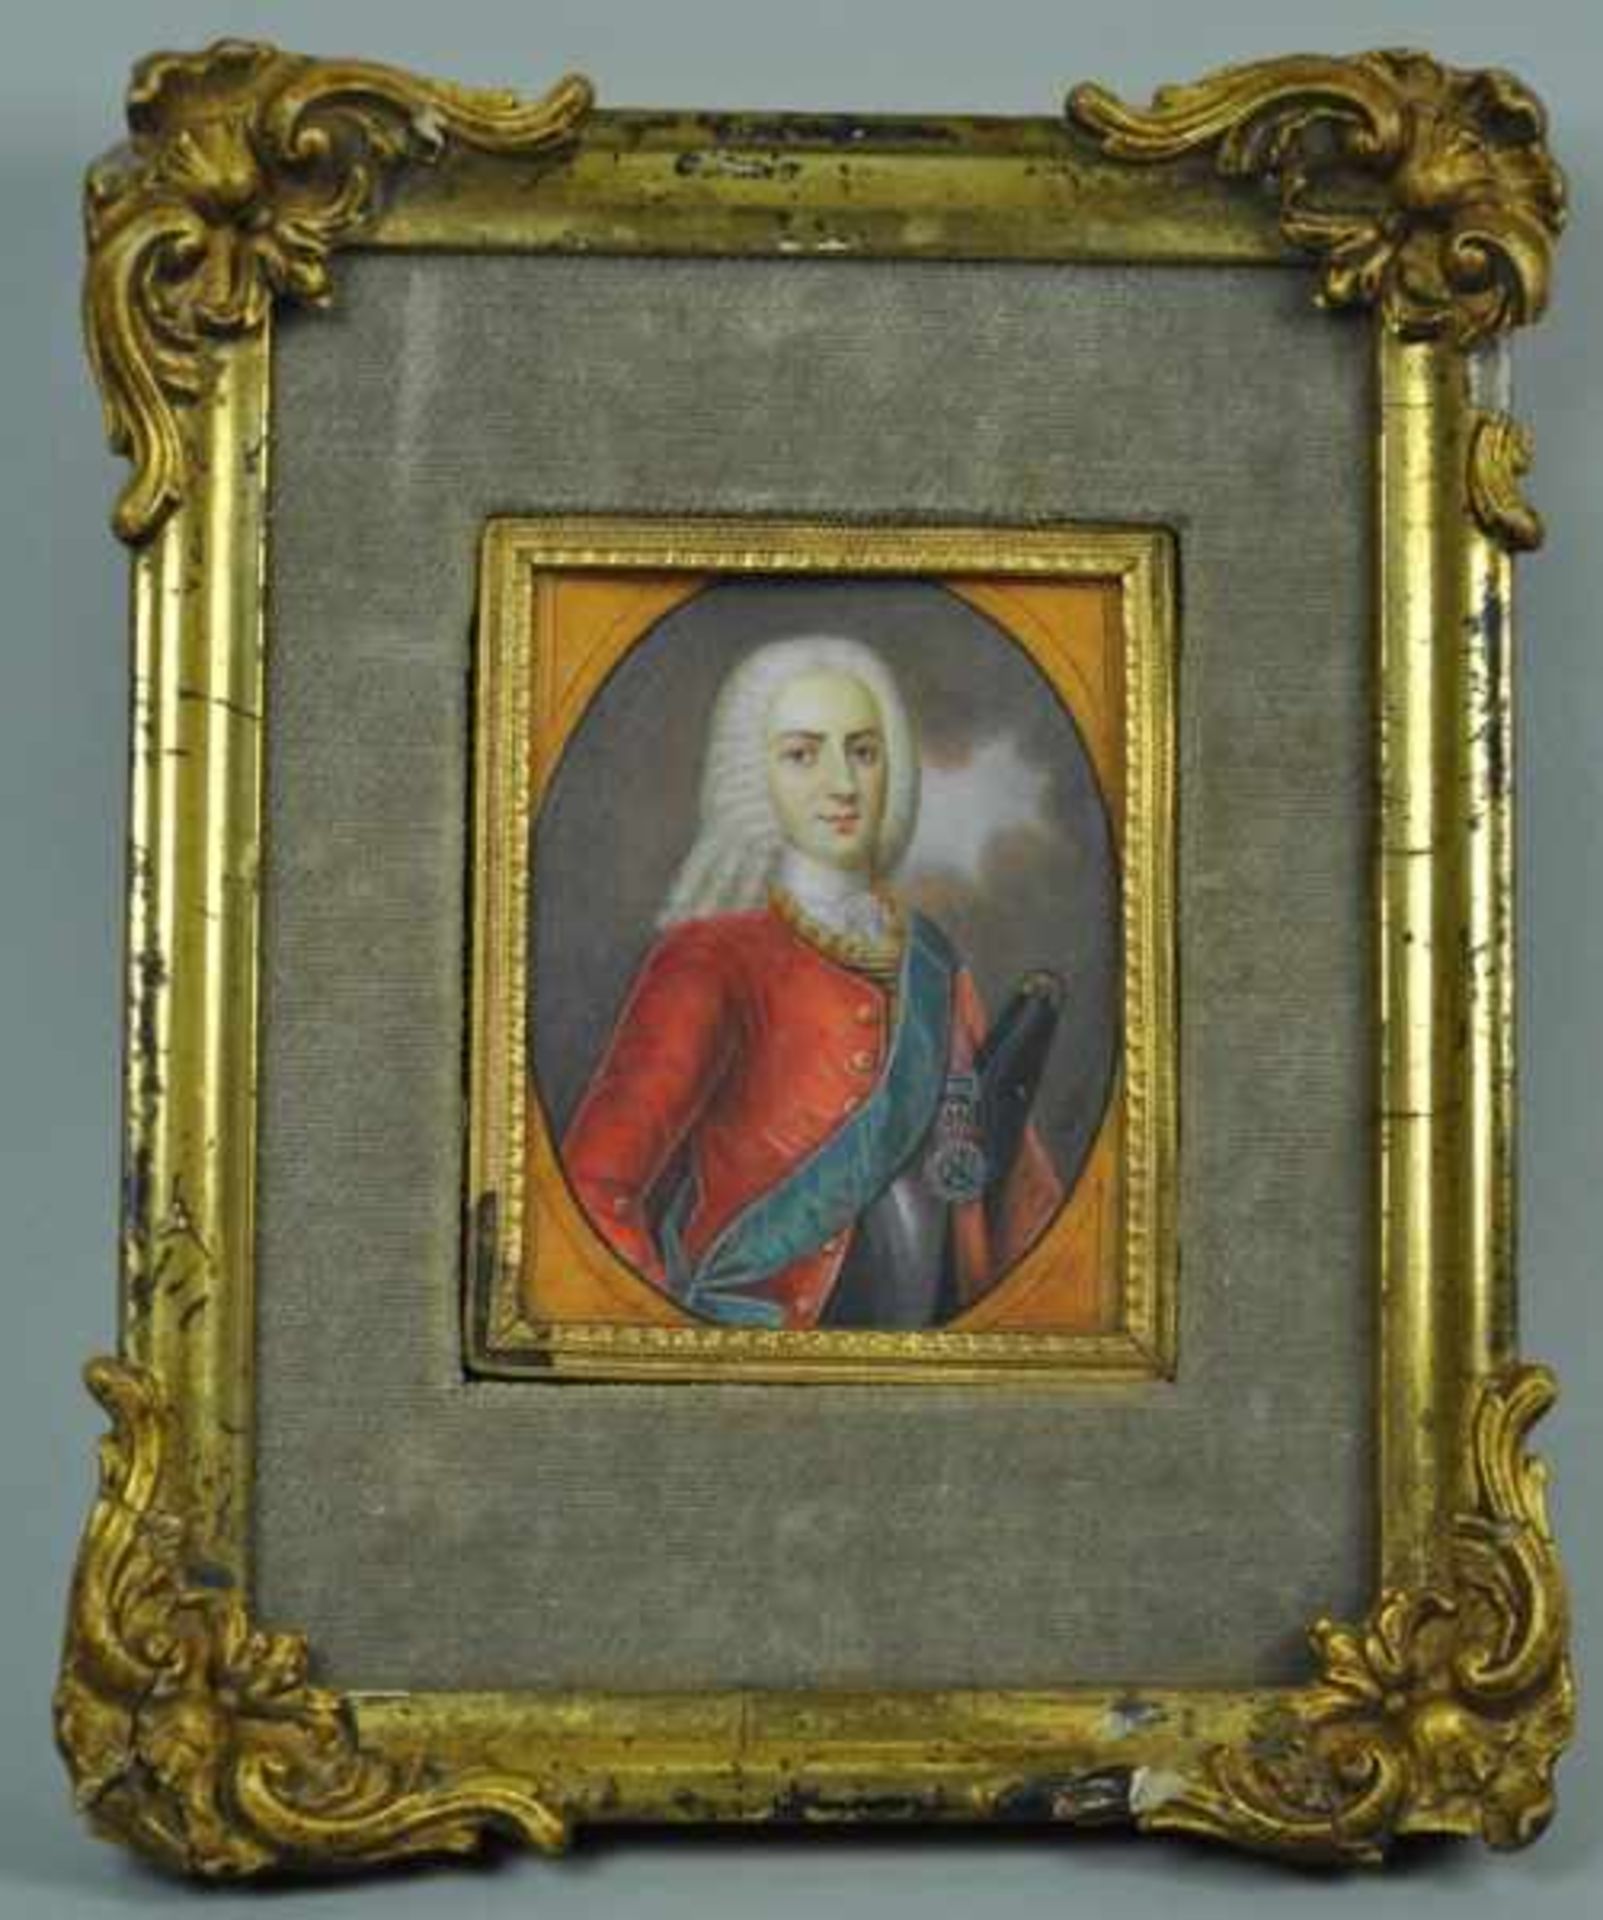 MINIATURMALEREI (18.Jh.) "Herzog von Bourbon", in Halbfigur, mit Schärpe u. Orden, Miniaturmalerei - Image 3 of 5